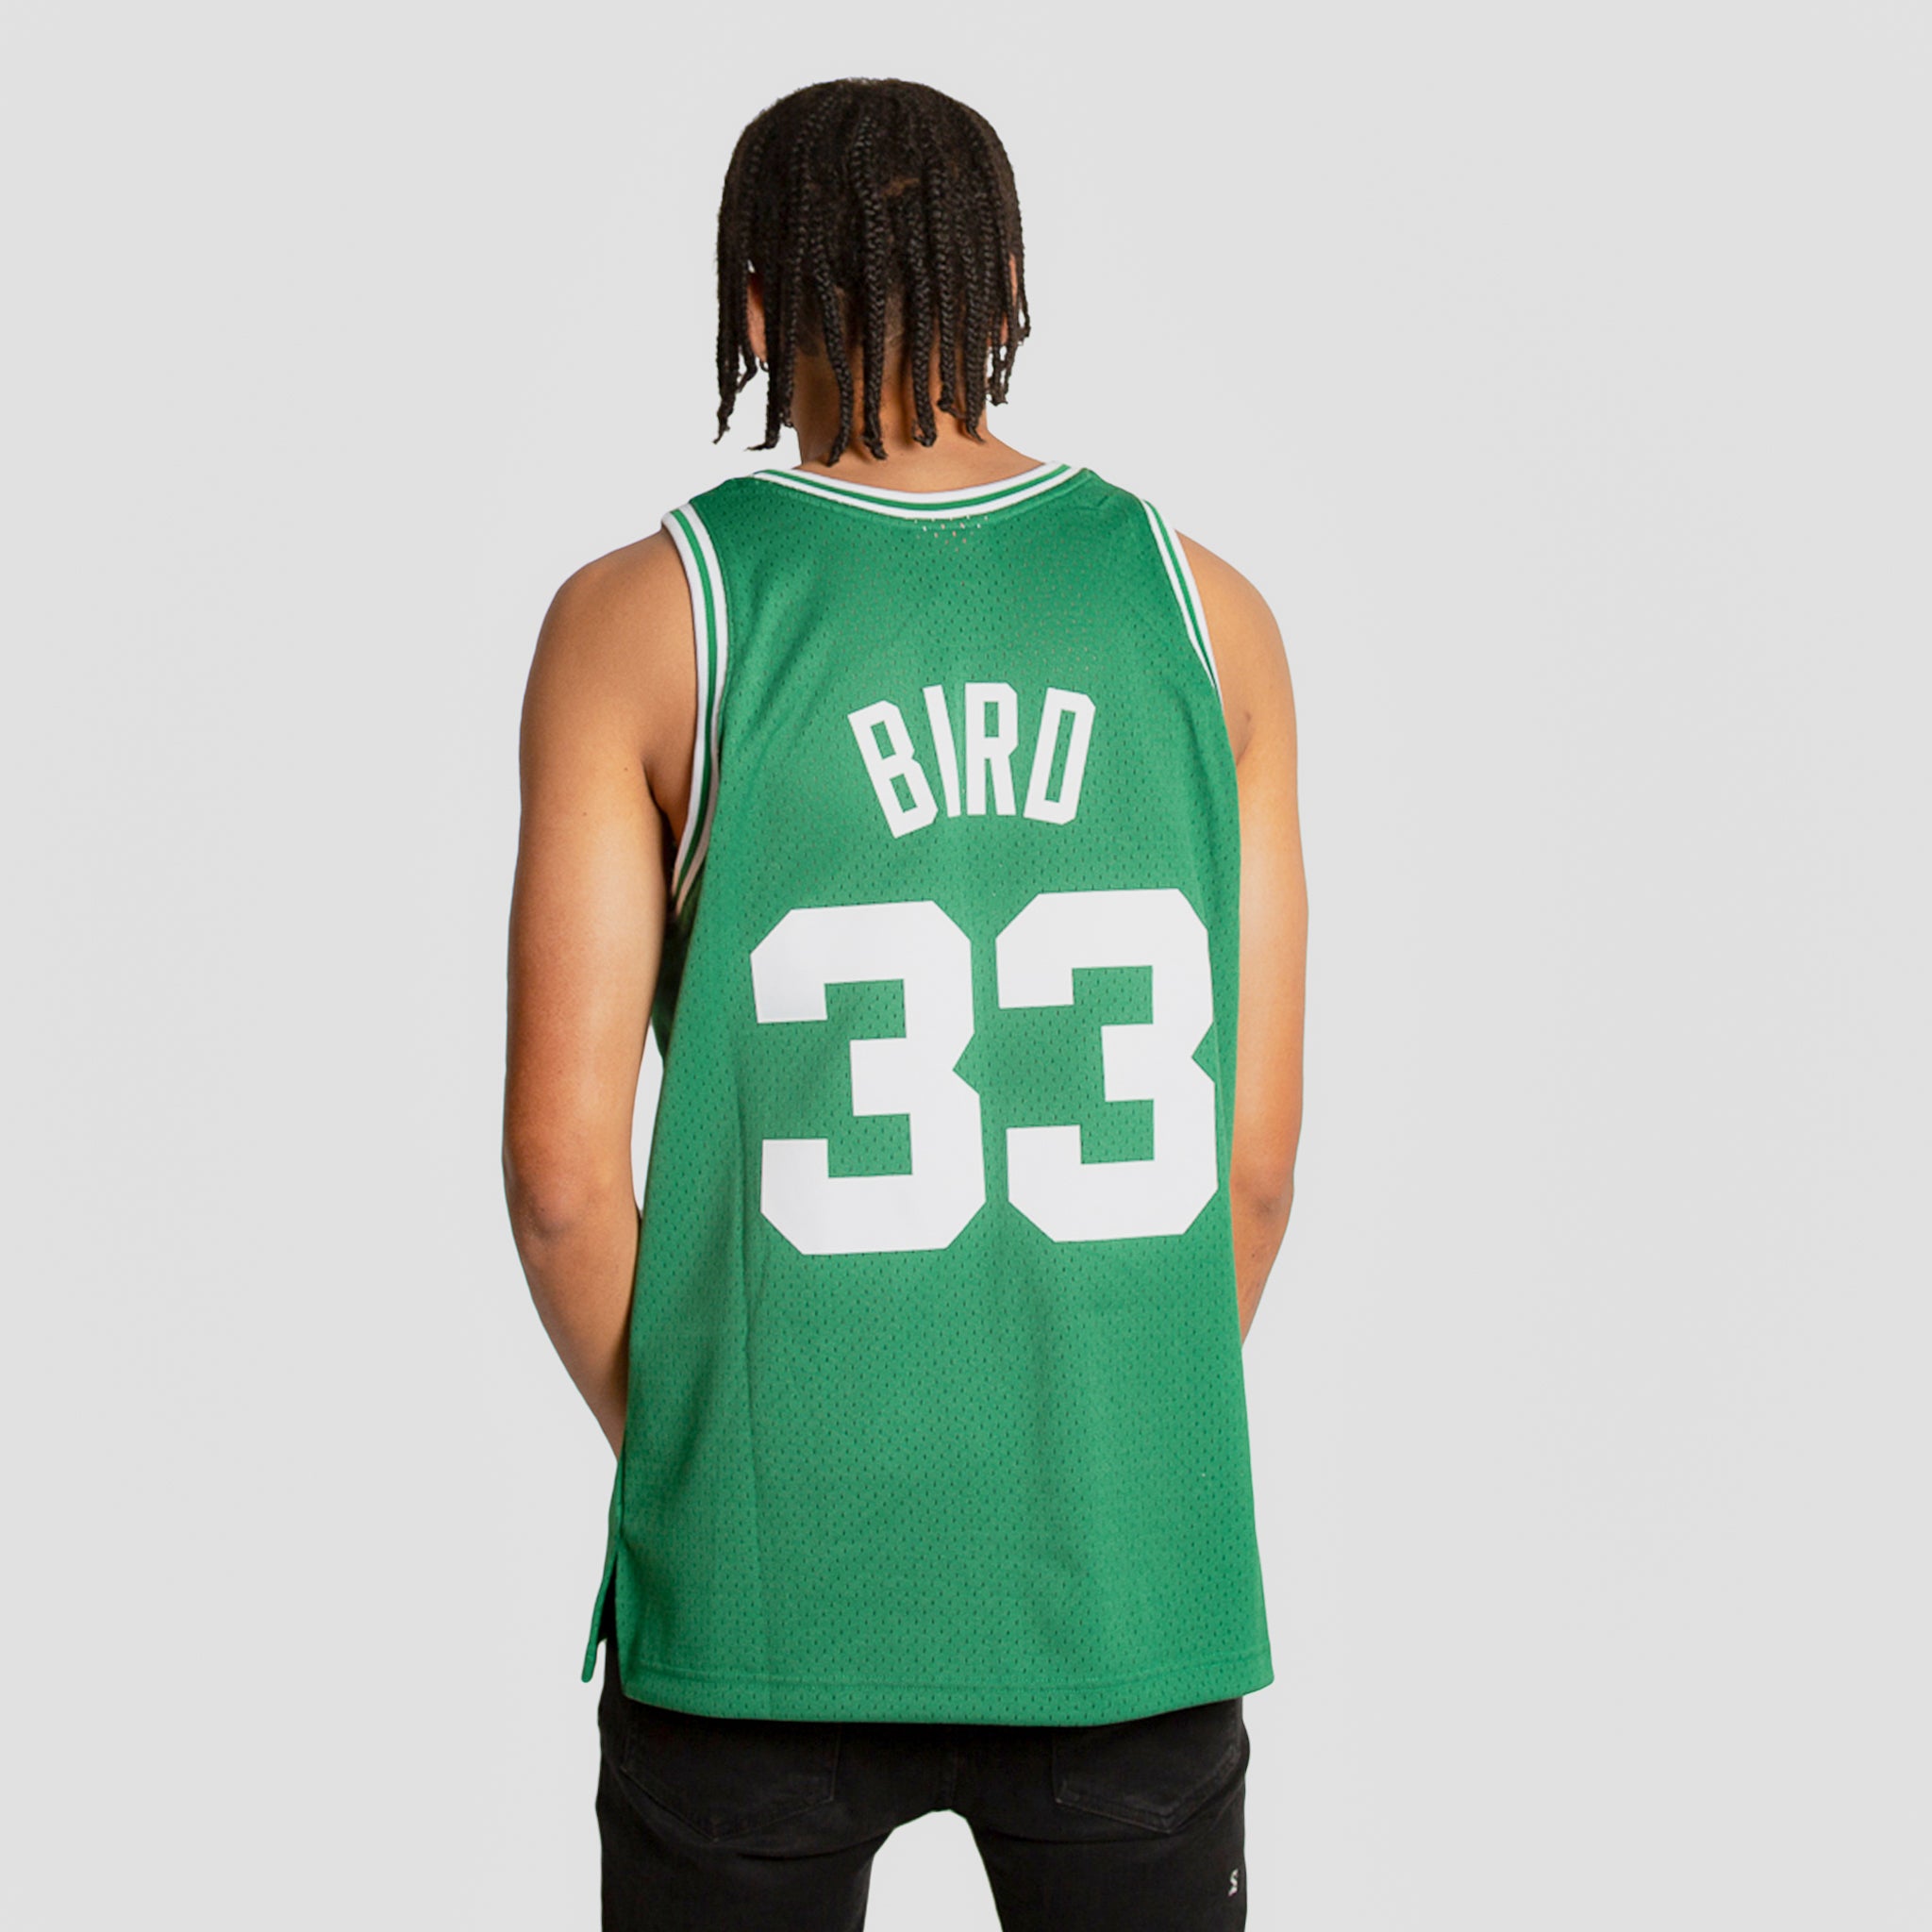 Larry Bird #33 Boston Celtics Adidas Hardwood Classics Jersey Size XL  Length +2